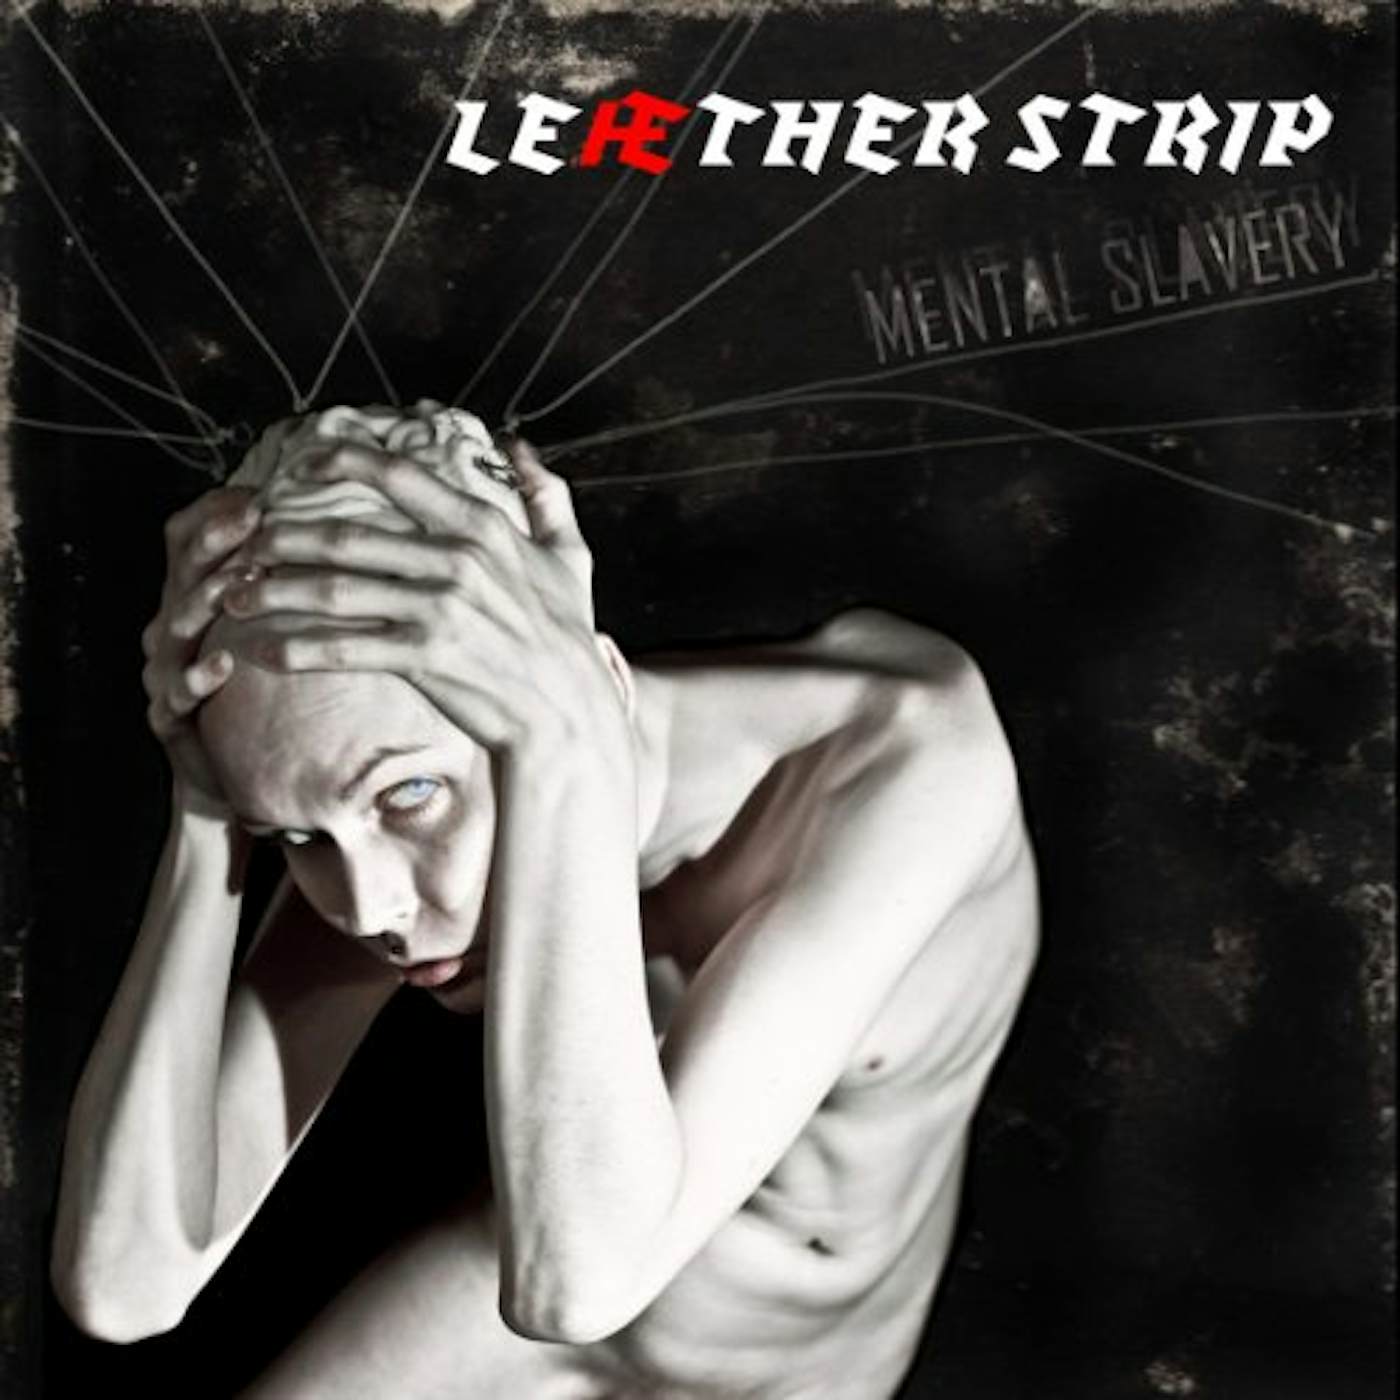 Leaether Strip MENTAL SLAVERY CD